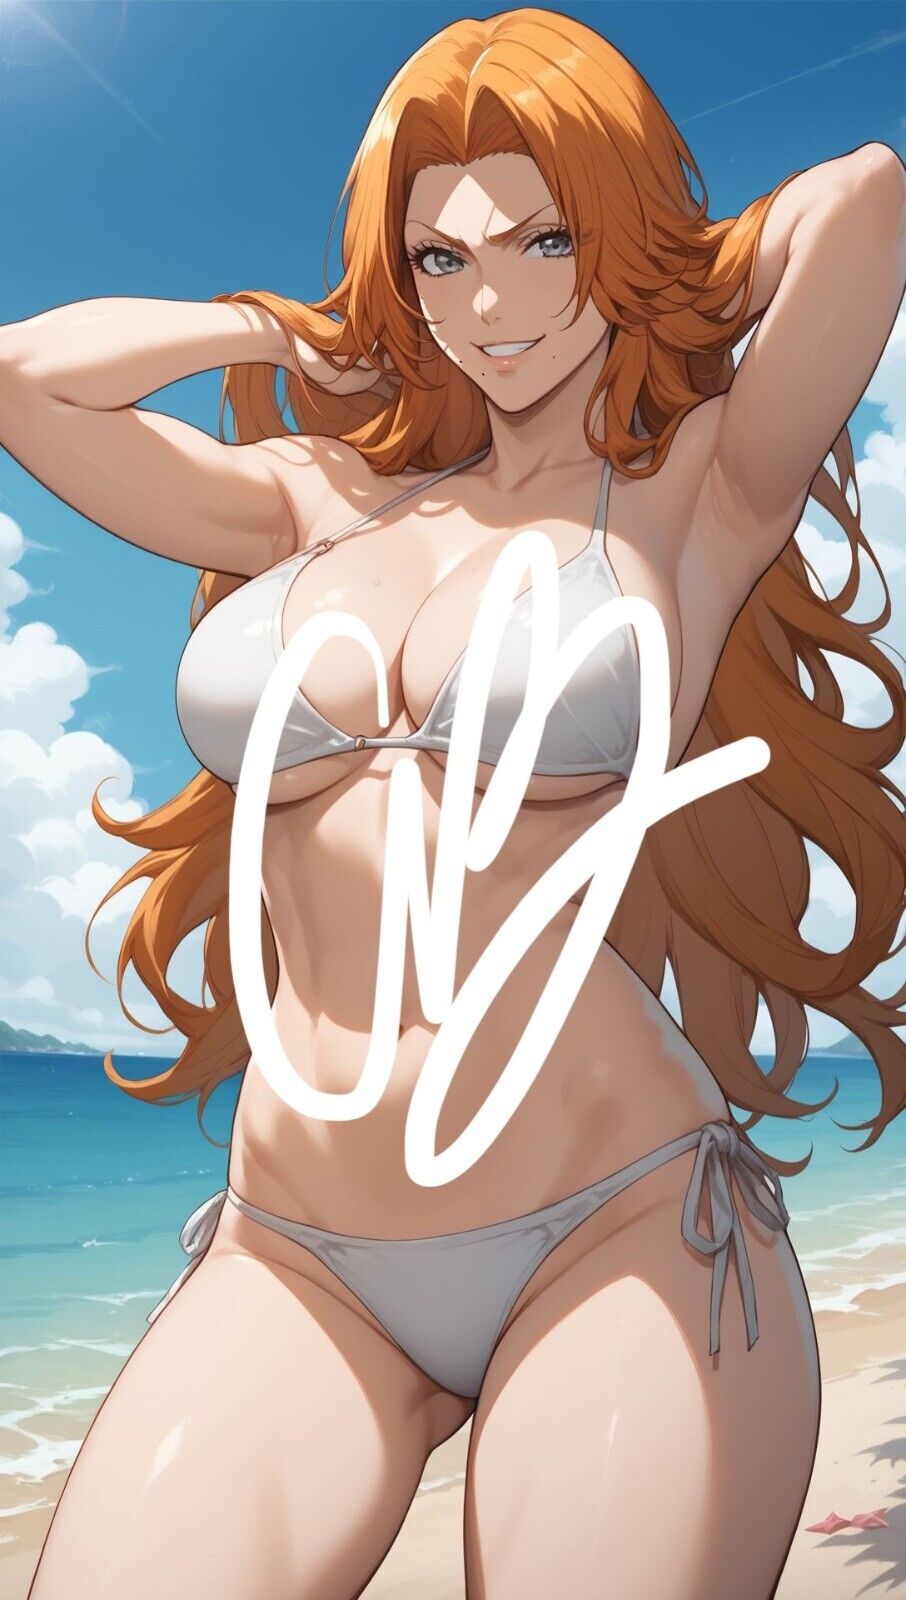 Rangiku Swimsuit - Bleach - Anime Waifu Art Print - GLOSSY PHOTO PRINT - [4x6]